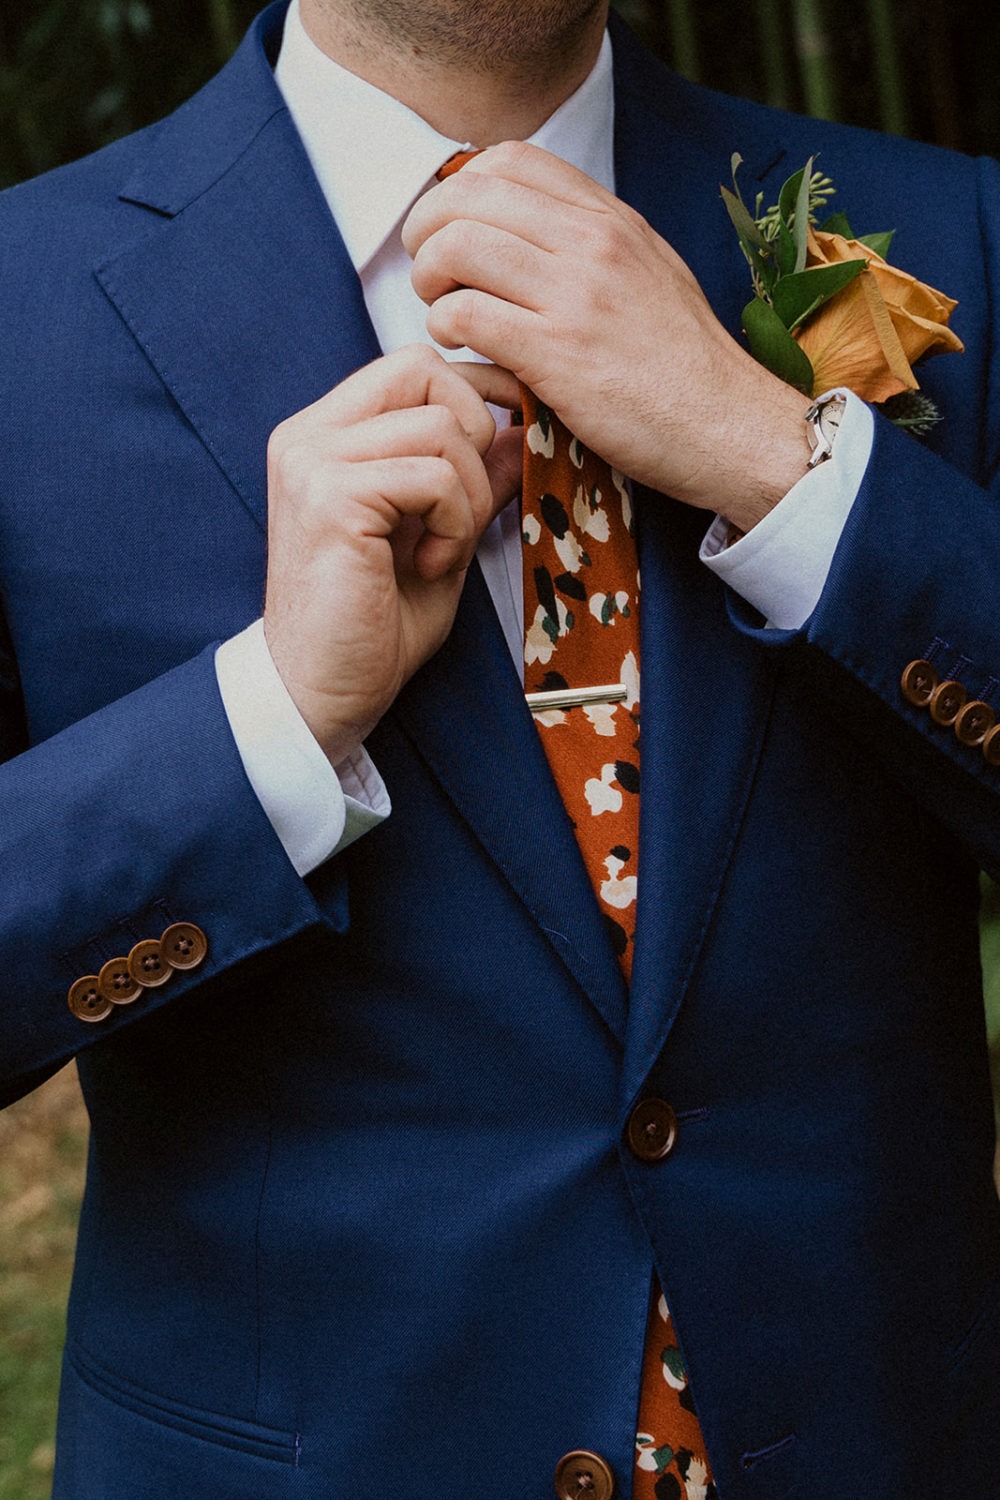 Groom ties tie while getting ready at backyard wedding 